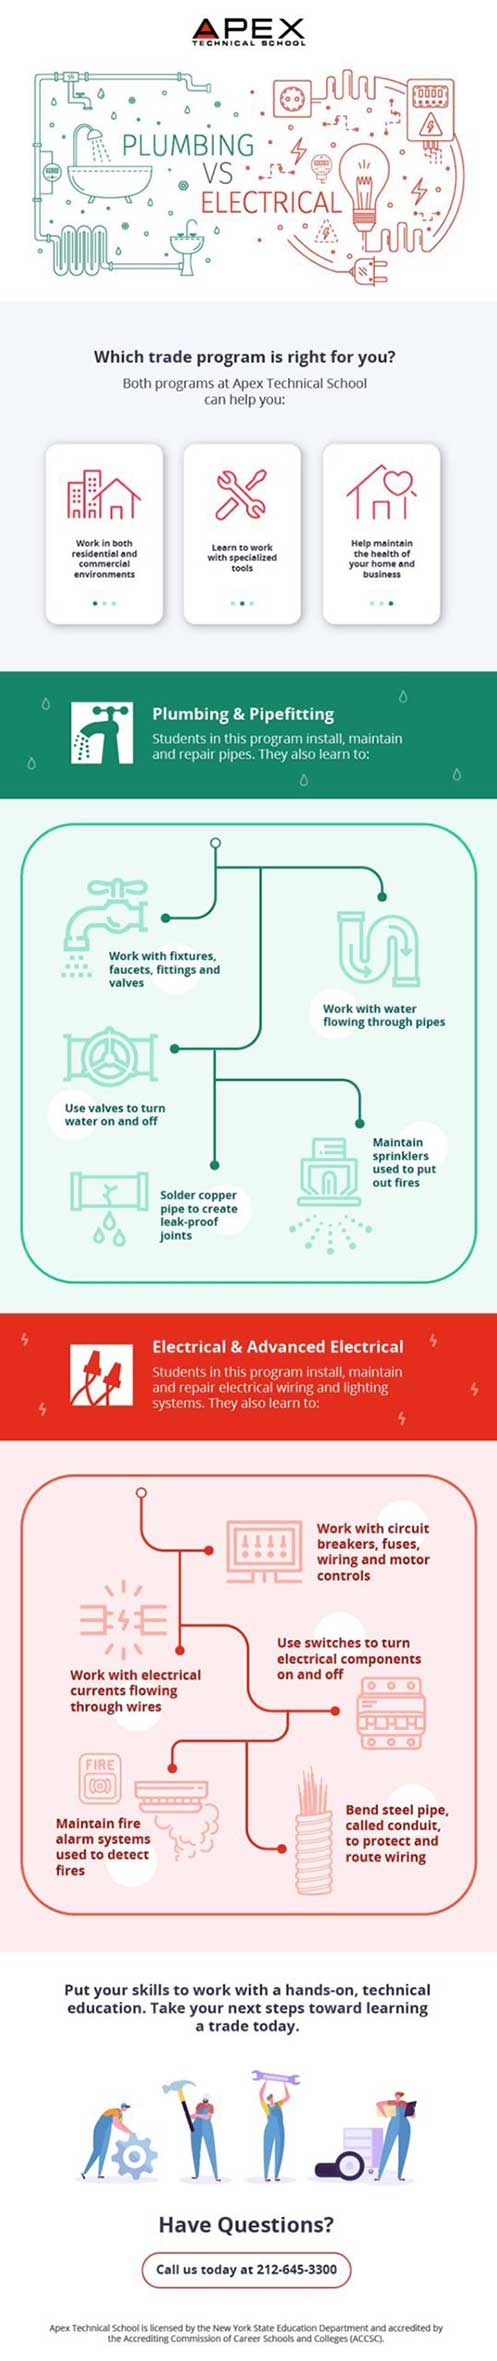 electricalvsplumbing_infographic-scaled